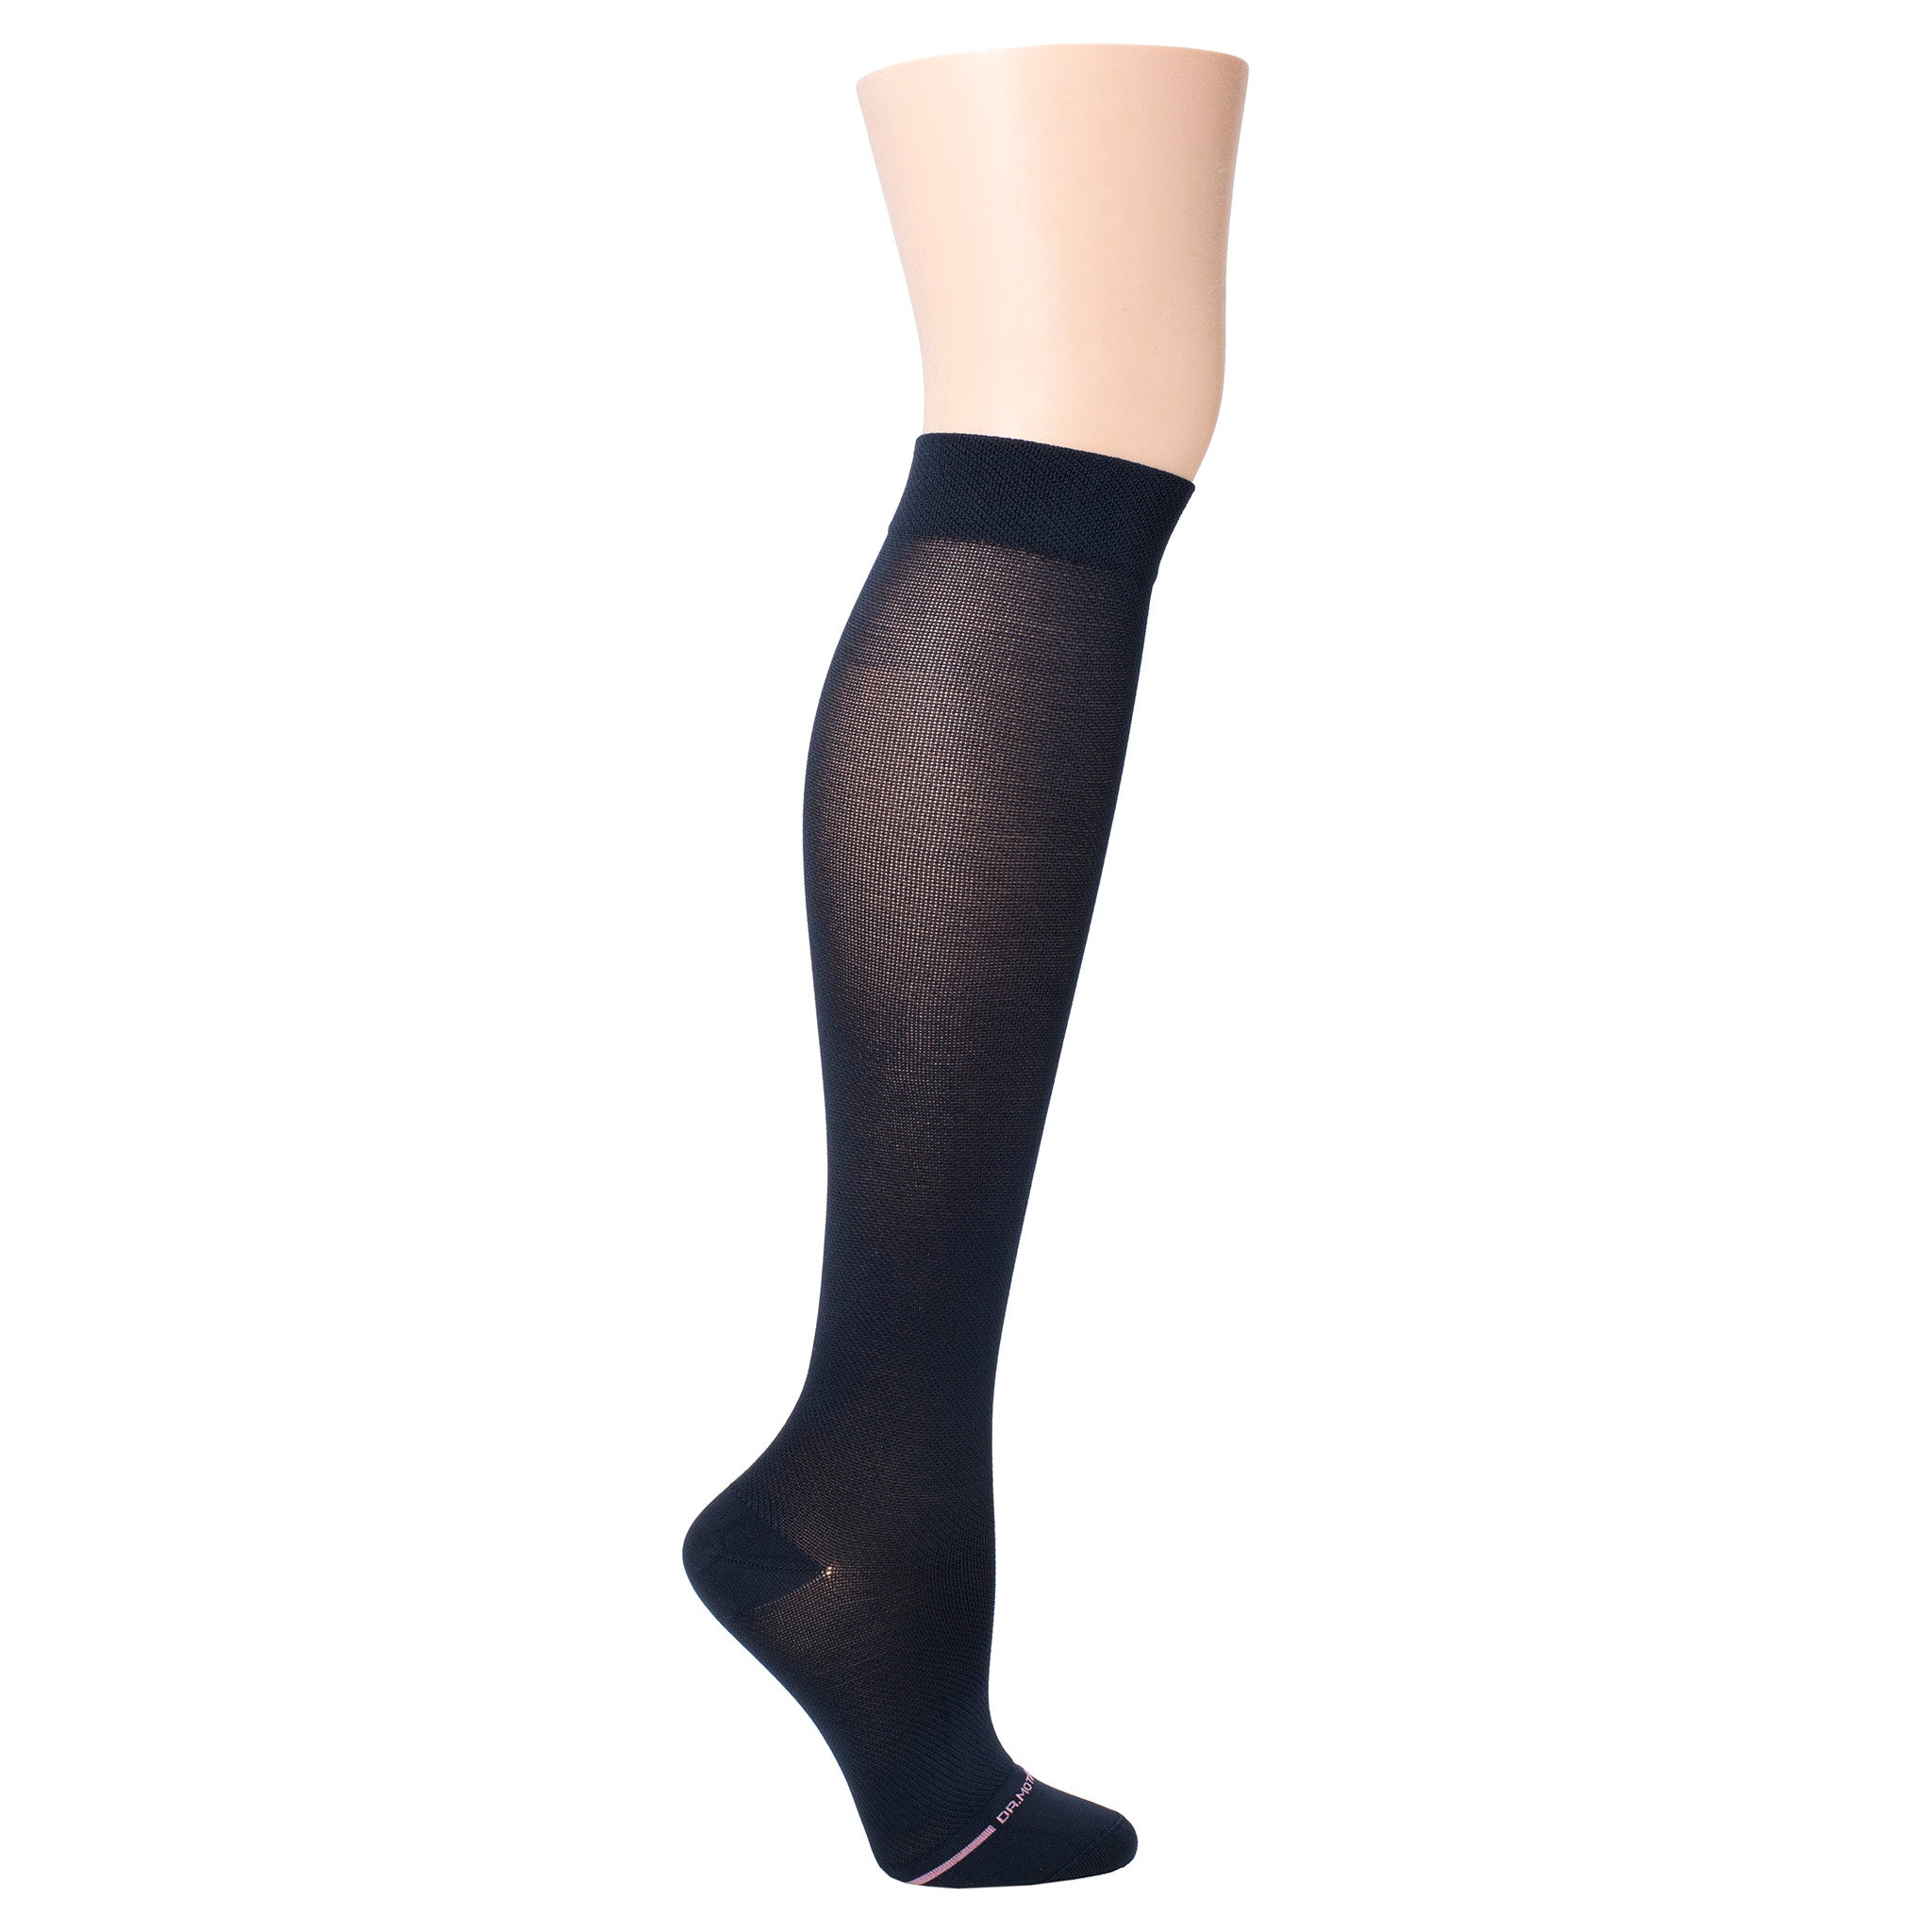 Solid Lightweight | Knee-High Compression Socks For Women